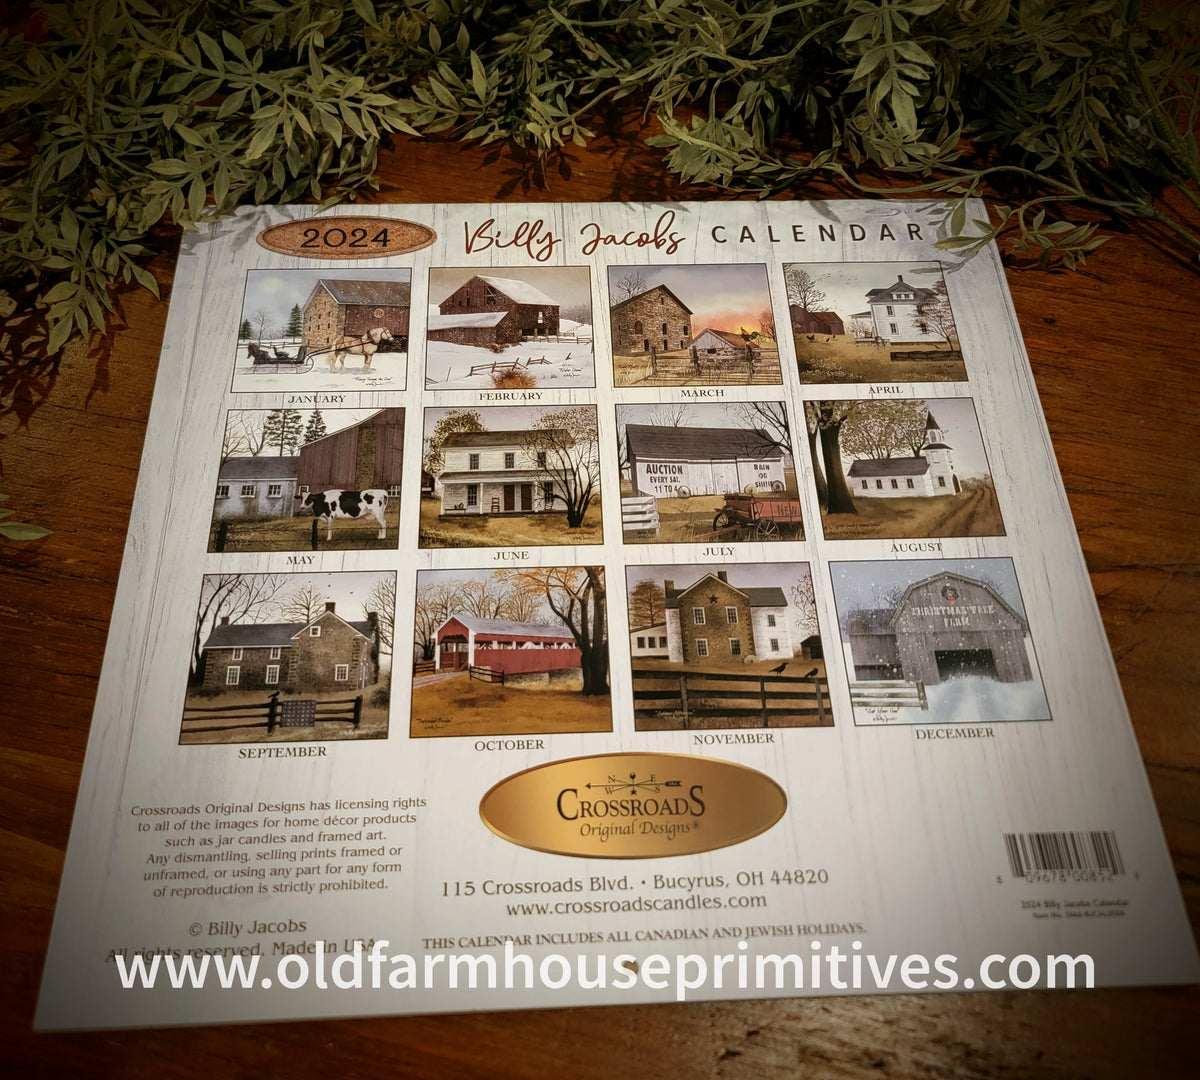 WC24BJ "Billy Jacobs" 2024 Wall Calendar Old Farmhouse Primitives